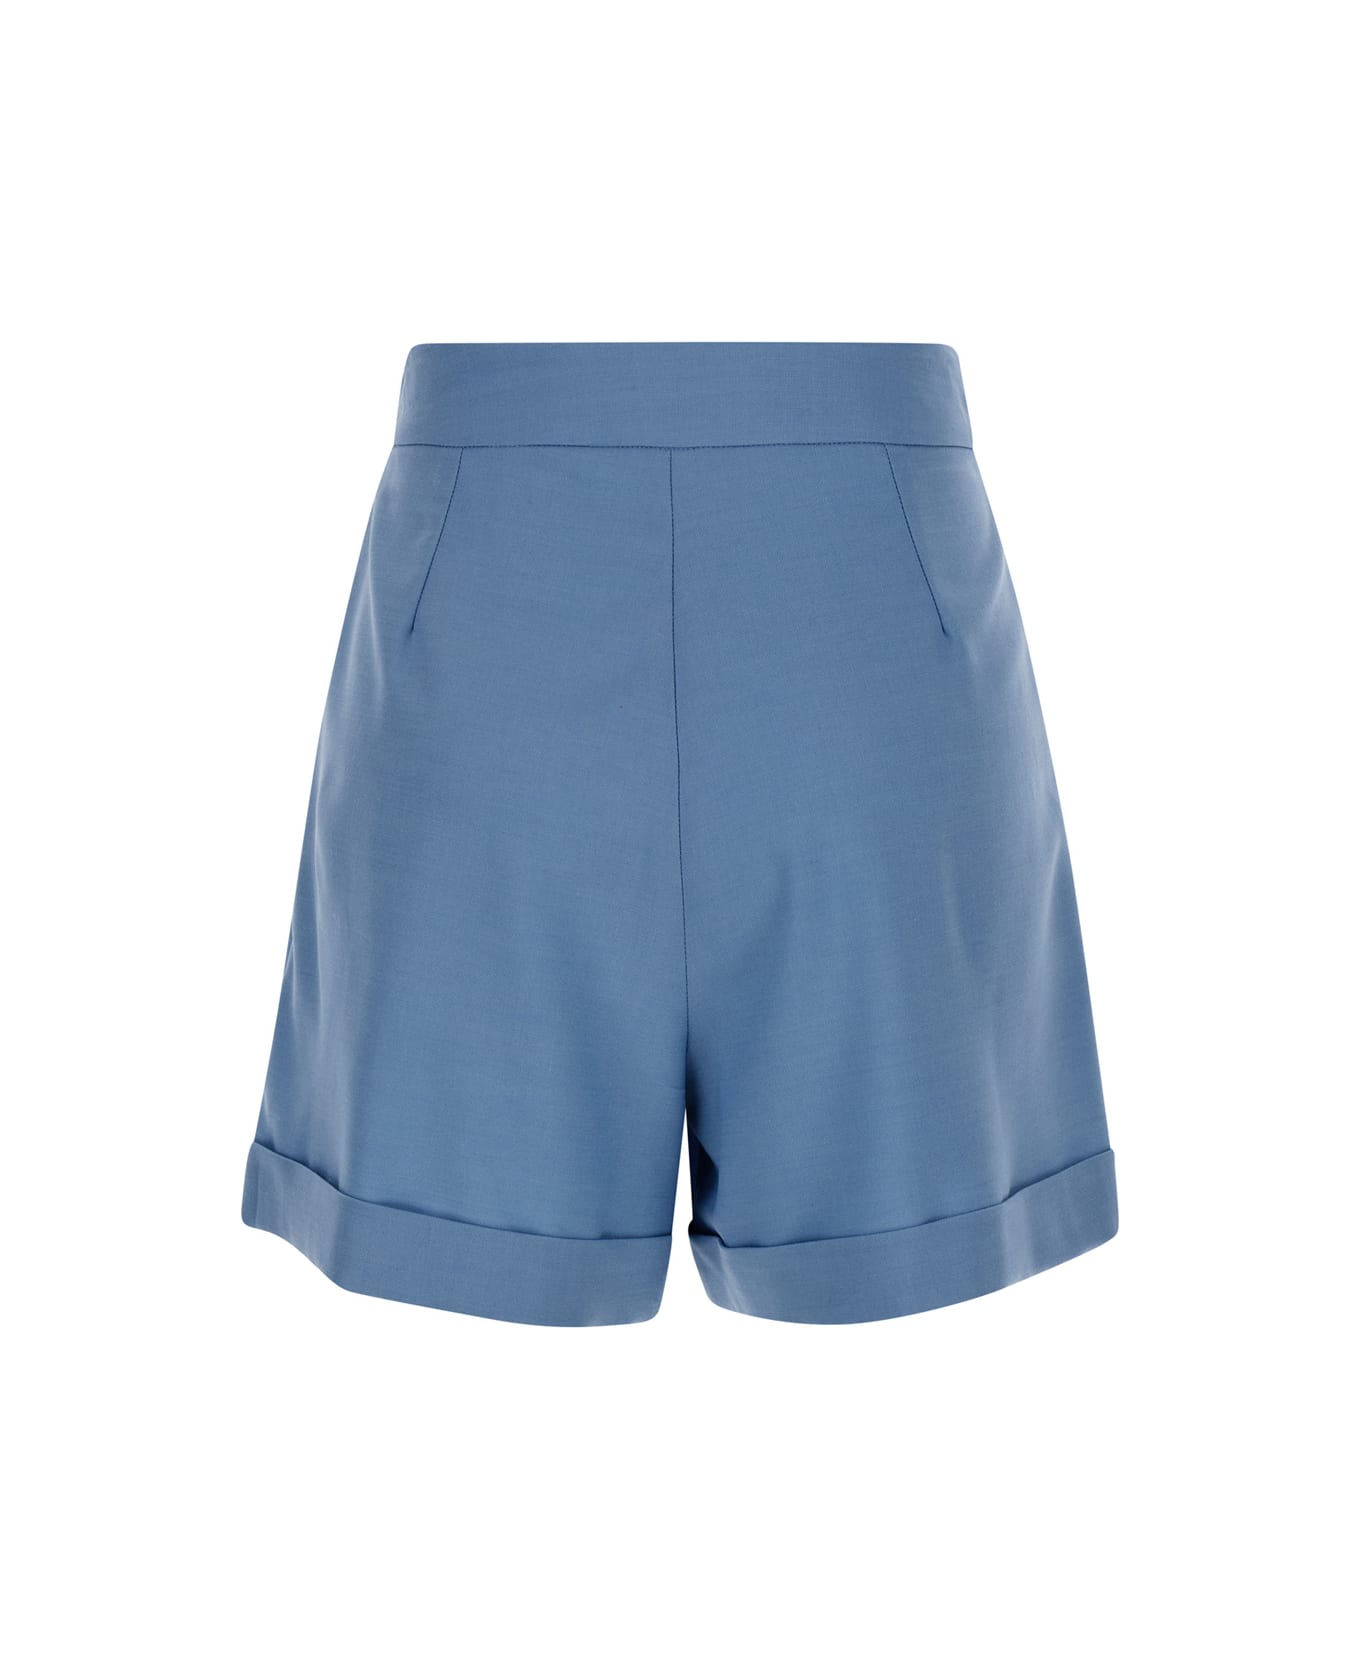 Federica Tosi Light Blue Pleated Shorts In Wool Blend Woman - Blu